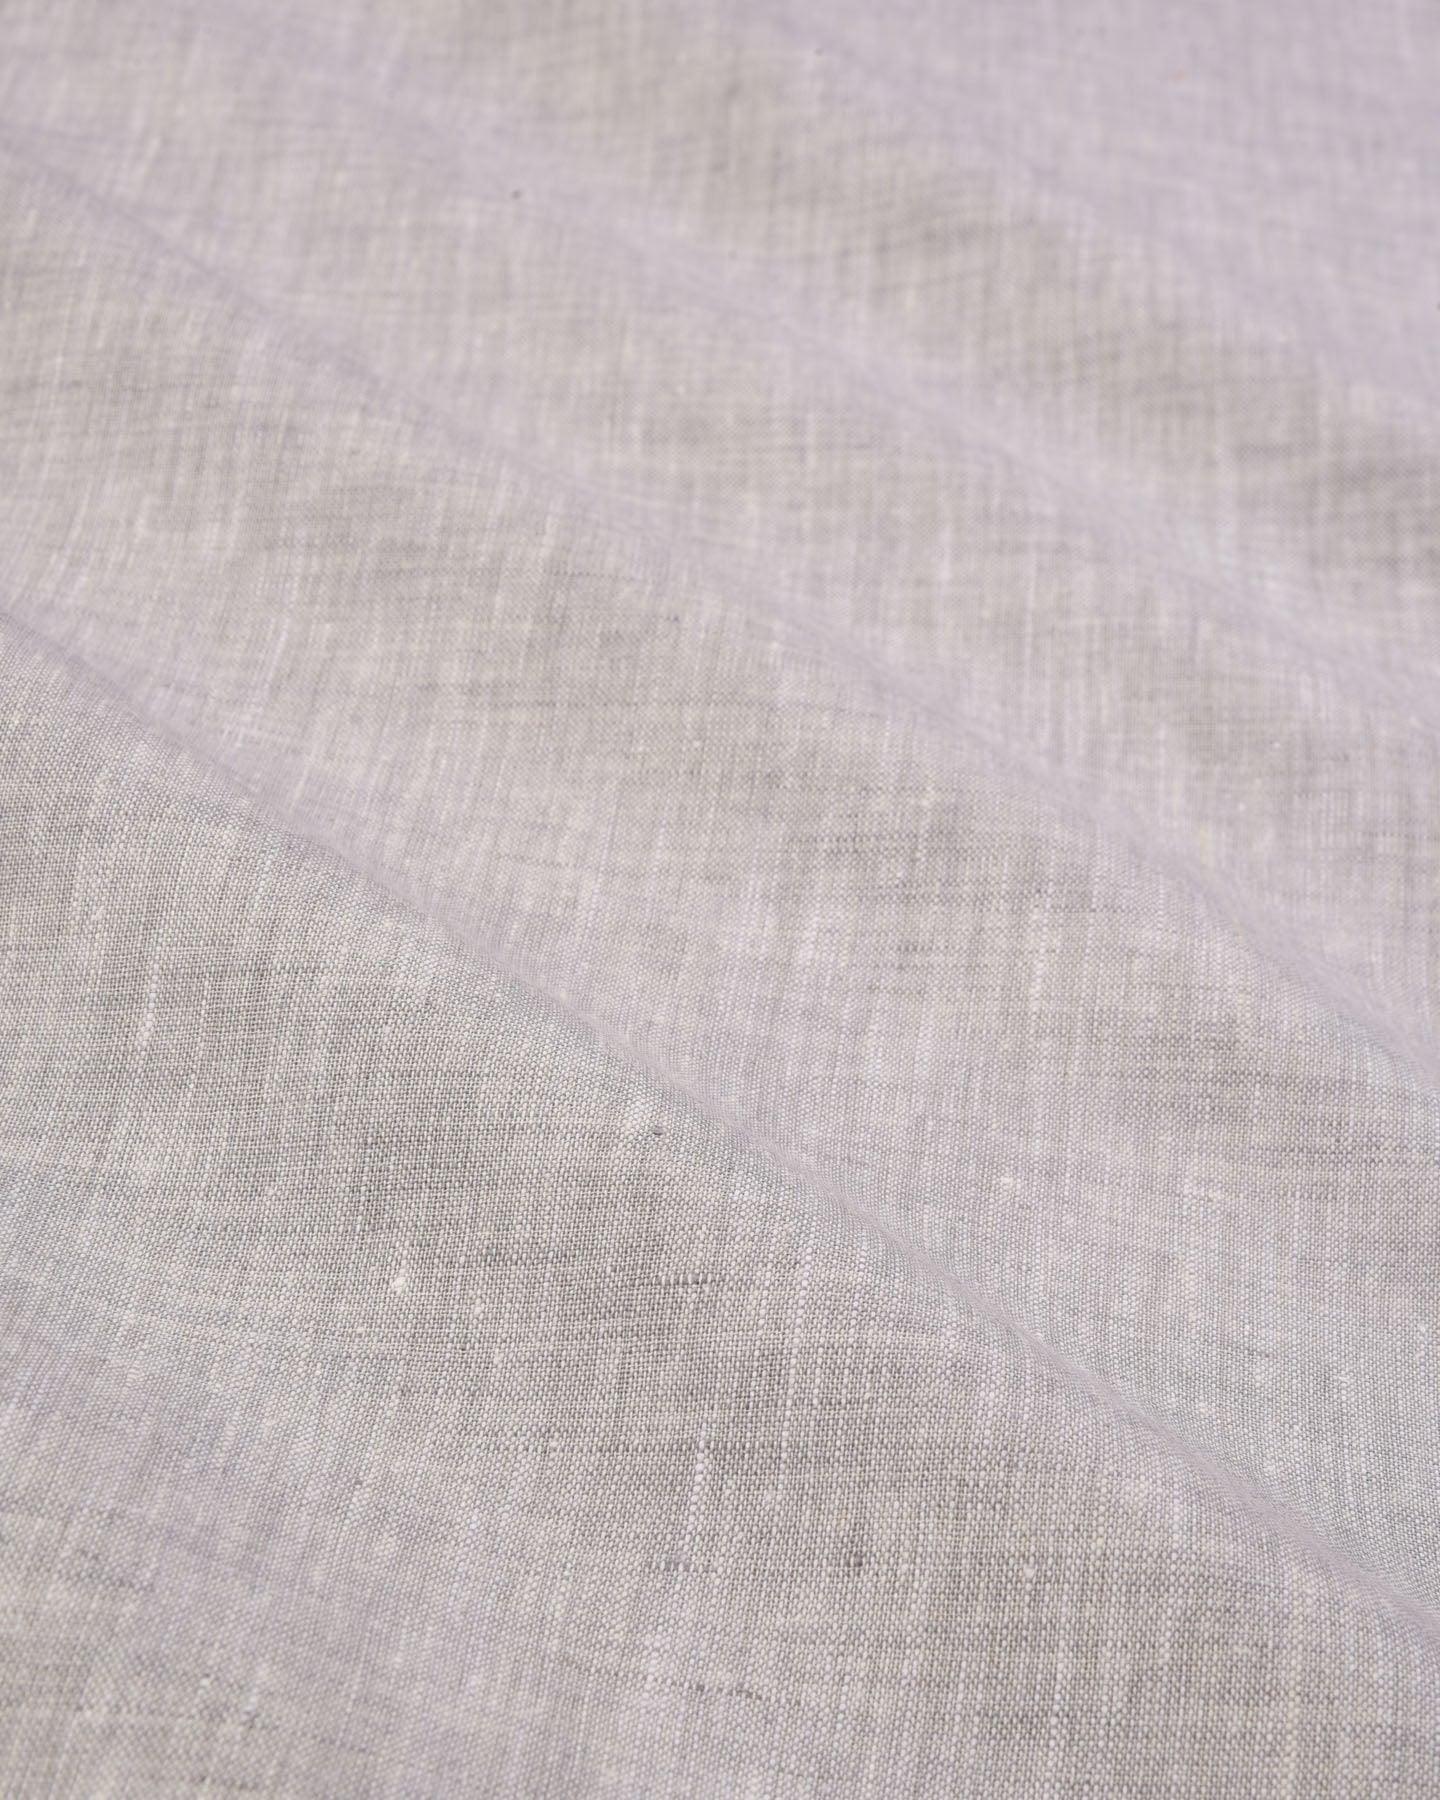 Silver Gray Textured Plain Woven Cotton Linen Fabric - By HolyWeaves, Benares